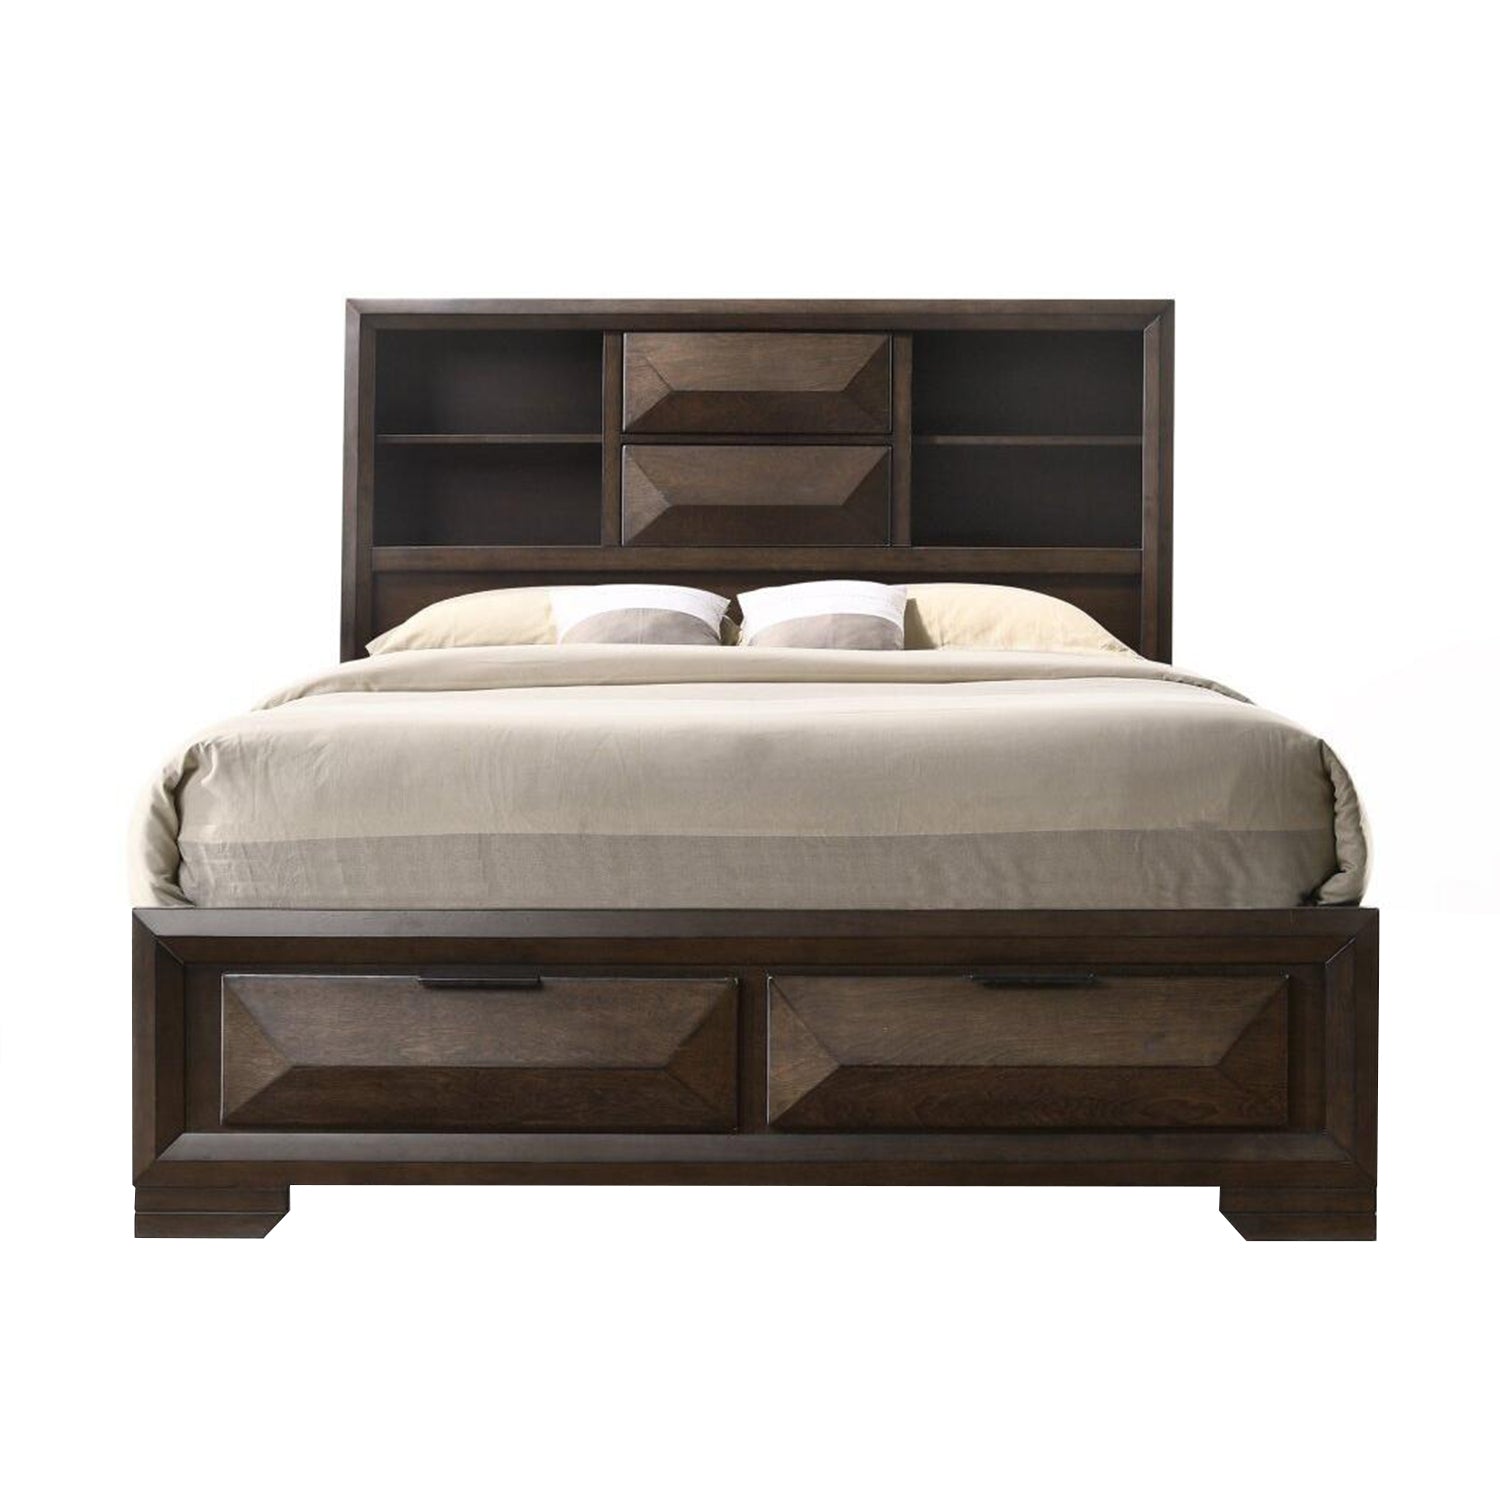 91" X 63" X 53" Espresso Rubber Wood Queen Storage Bed Default Title